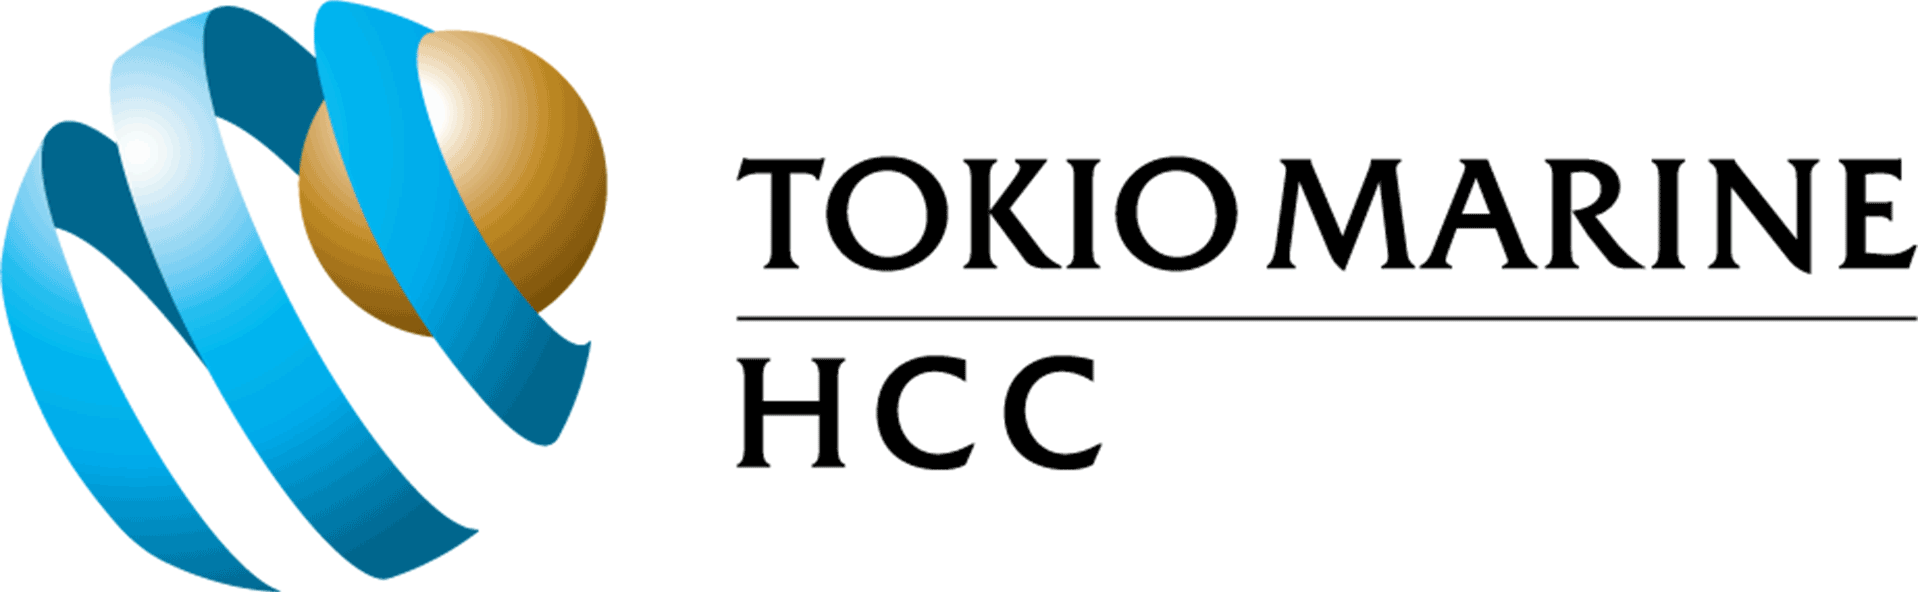 tokio-marine-hcc-logo